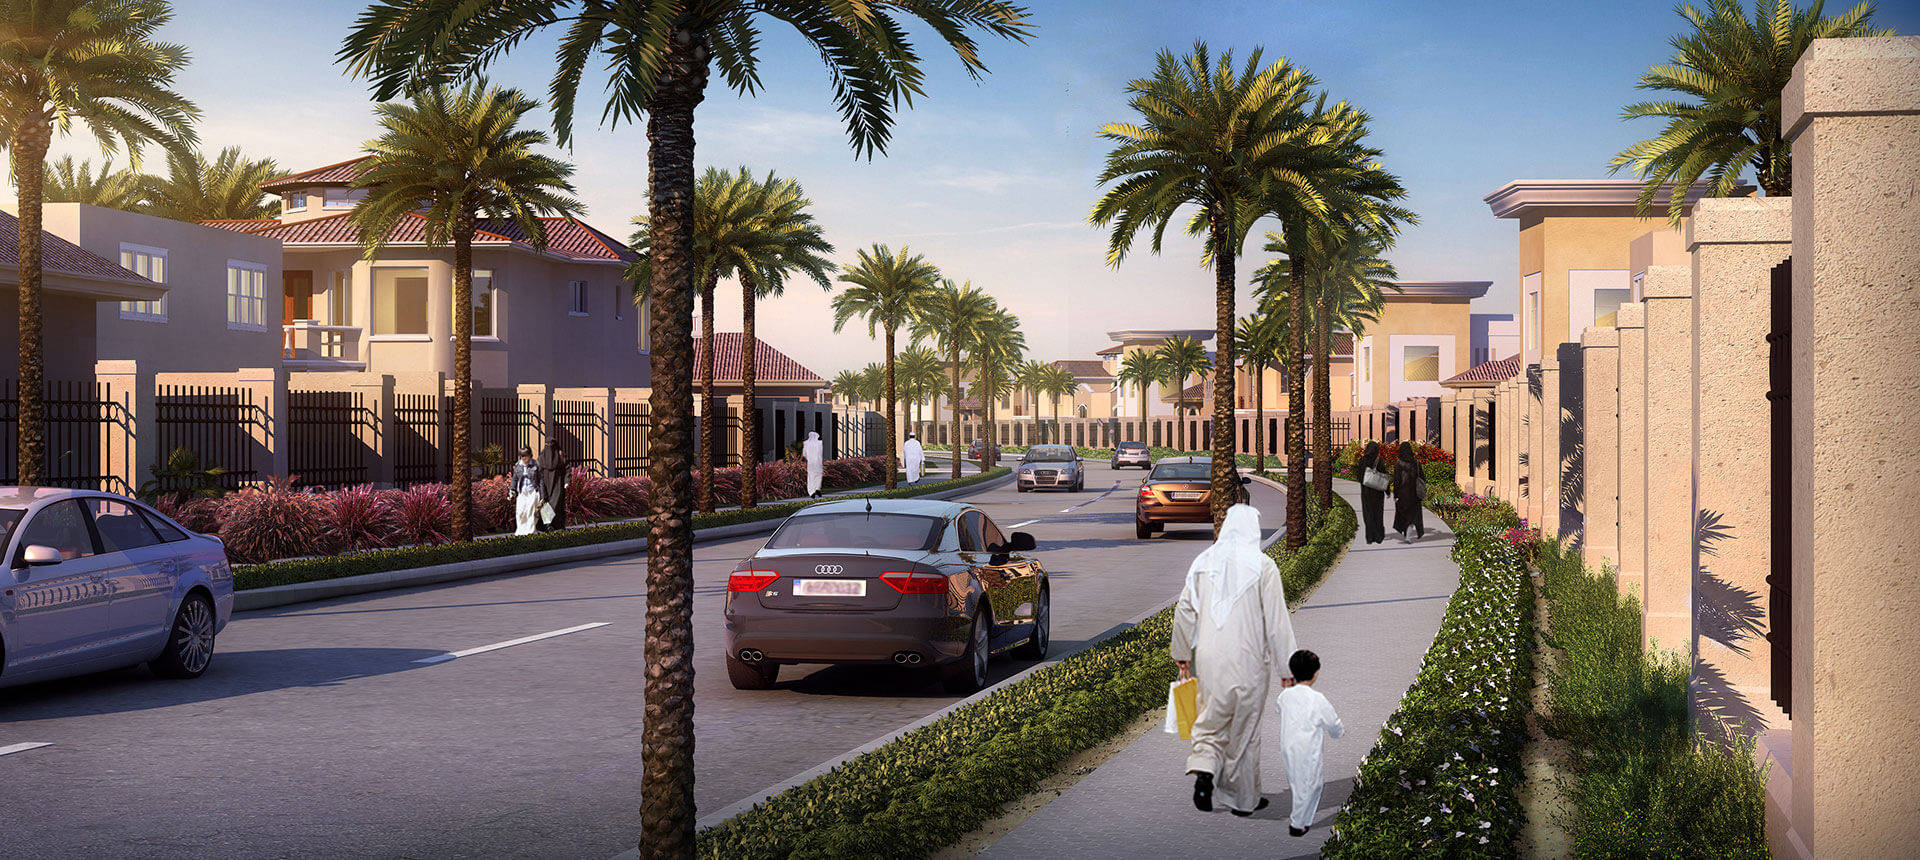 The Pearl-qatar Modernized Neighborhood Background